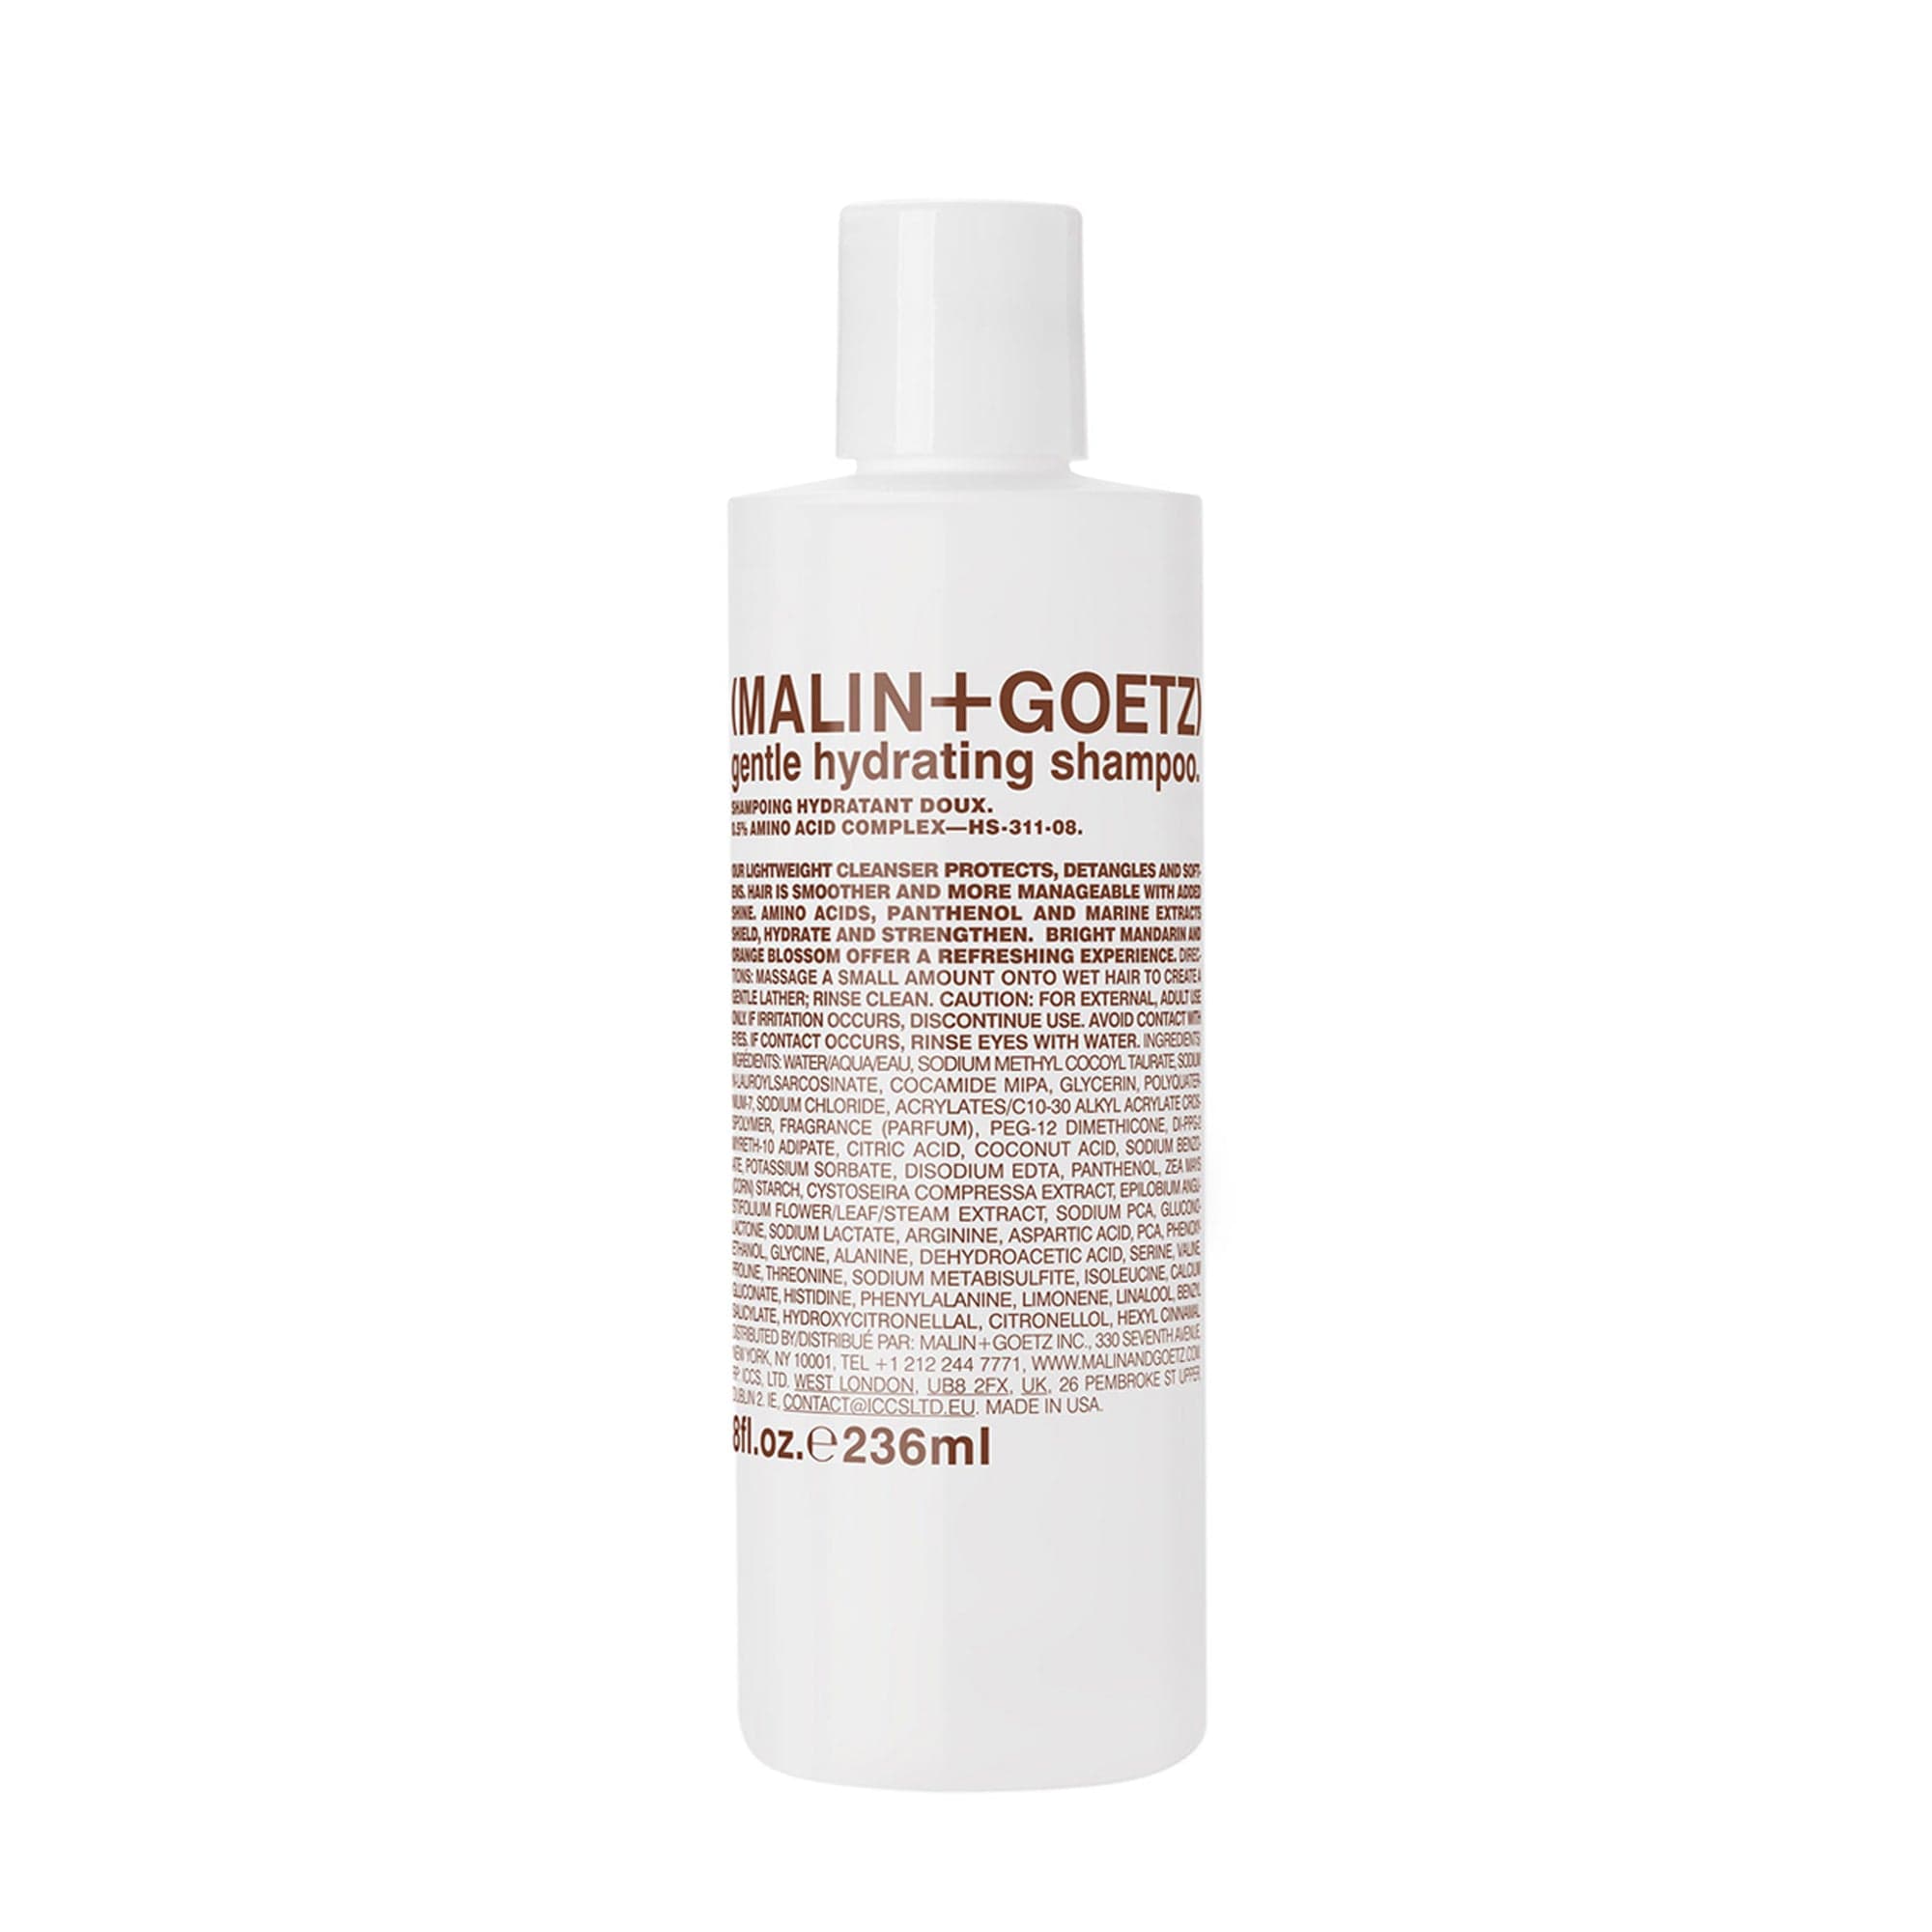 Gentle Hydrating Shampoo de (MALIN+GOETZ) Champú hidratante suave